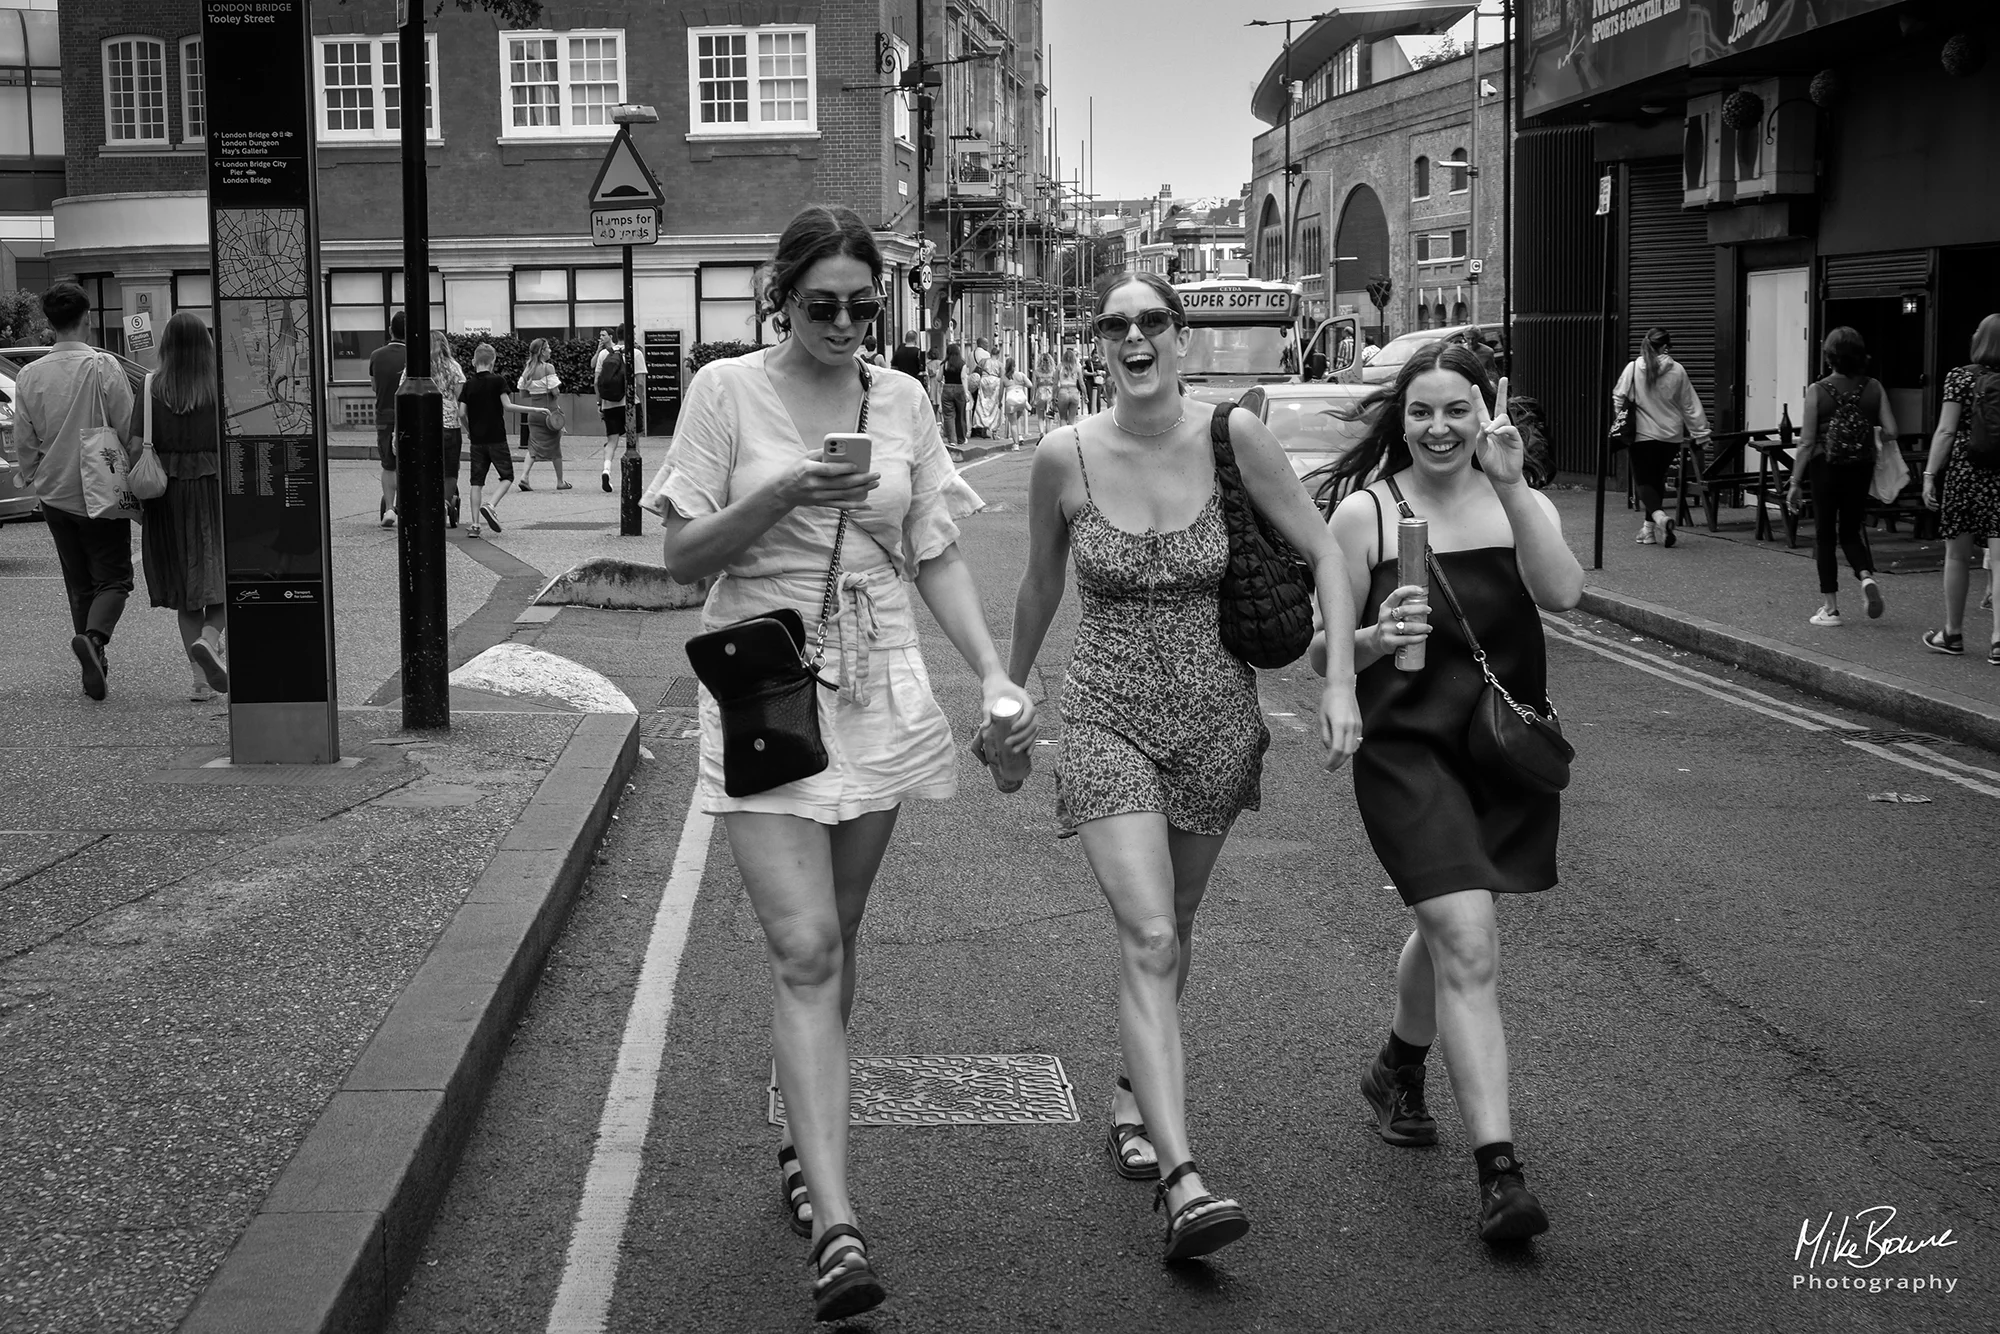 Three young women wearing sunglasses striding along a London street